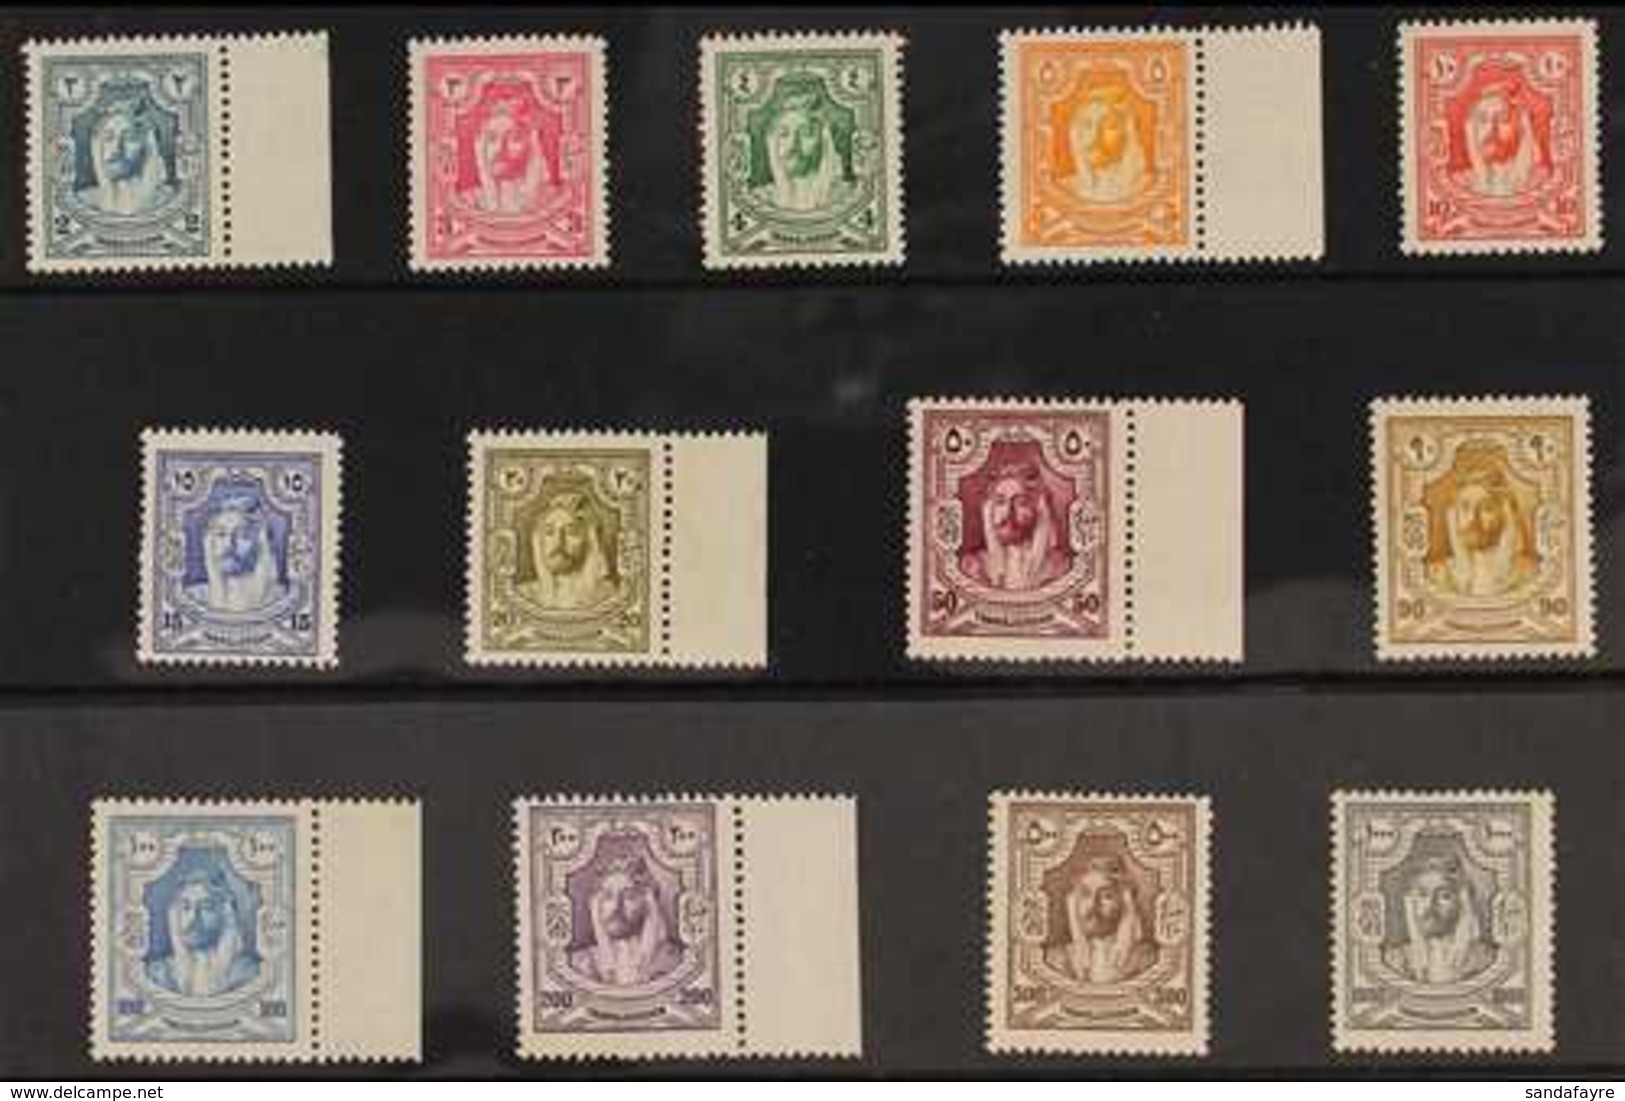 1927-29 New Currency Complete Set, SG 159/71, Very Fine Never Hinged Mint. (13 Stamps) For More Images, Please Visit Htt - Jordanië